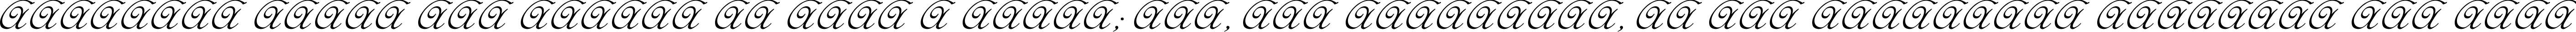 Пример написания шрифтом Elzevir текста на испанском